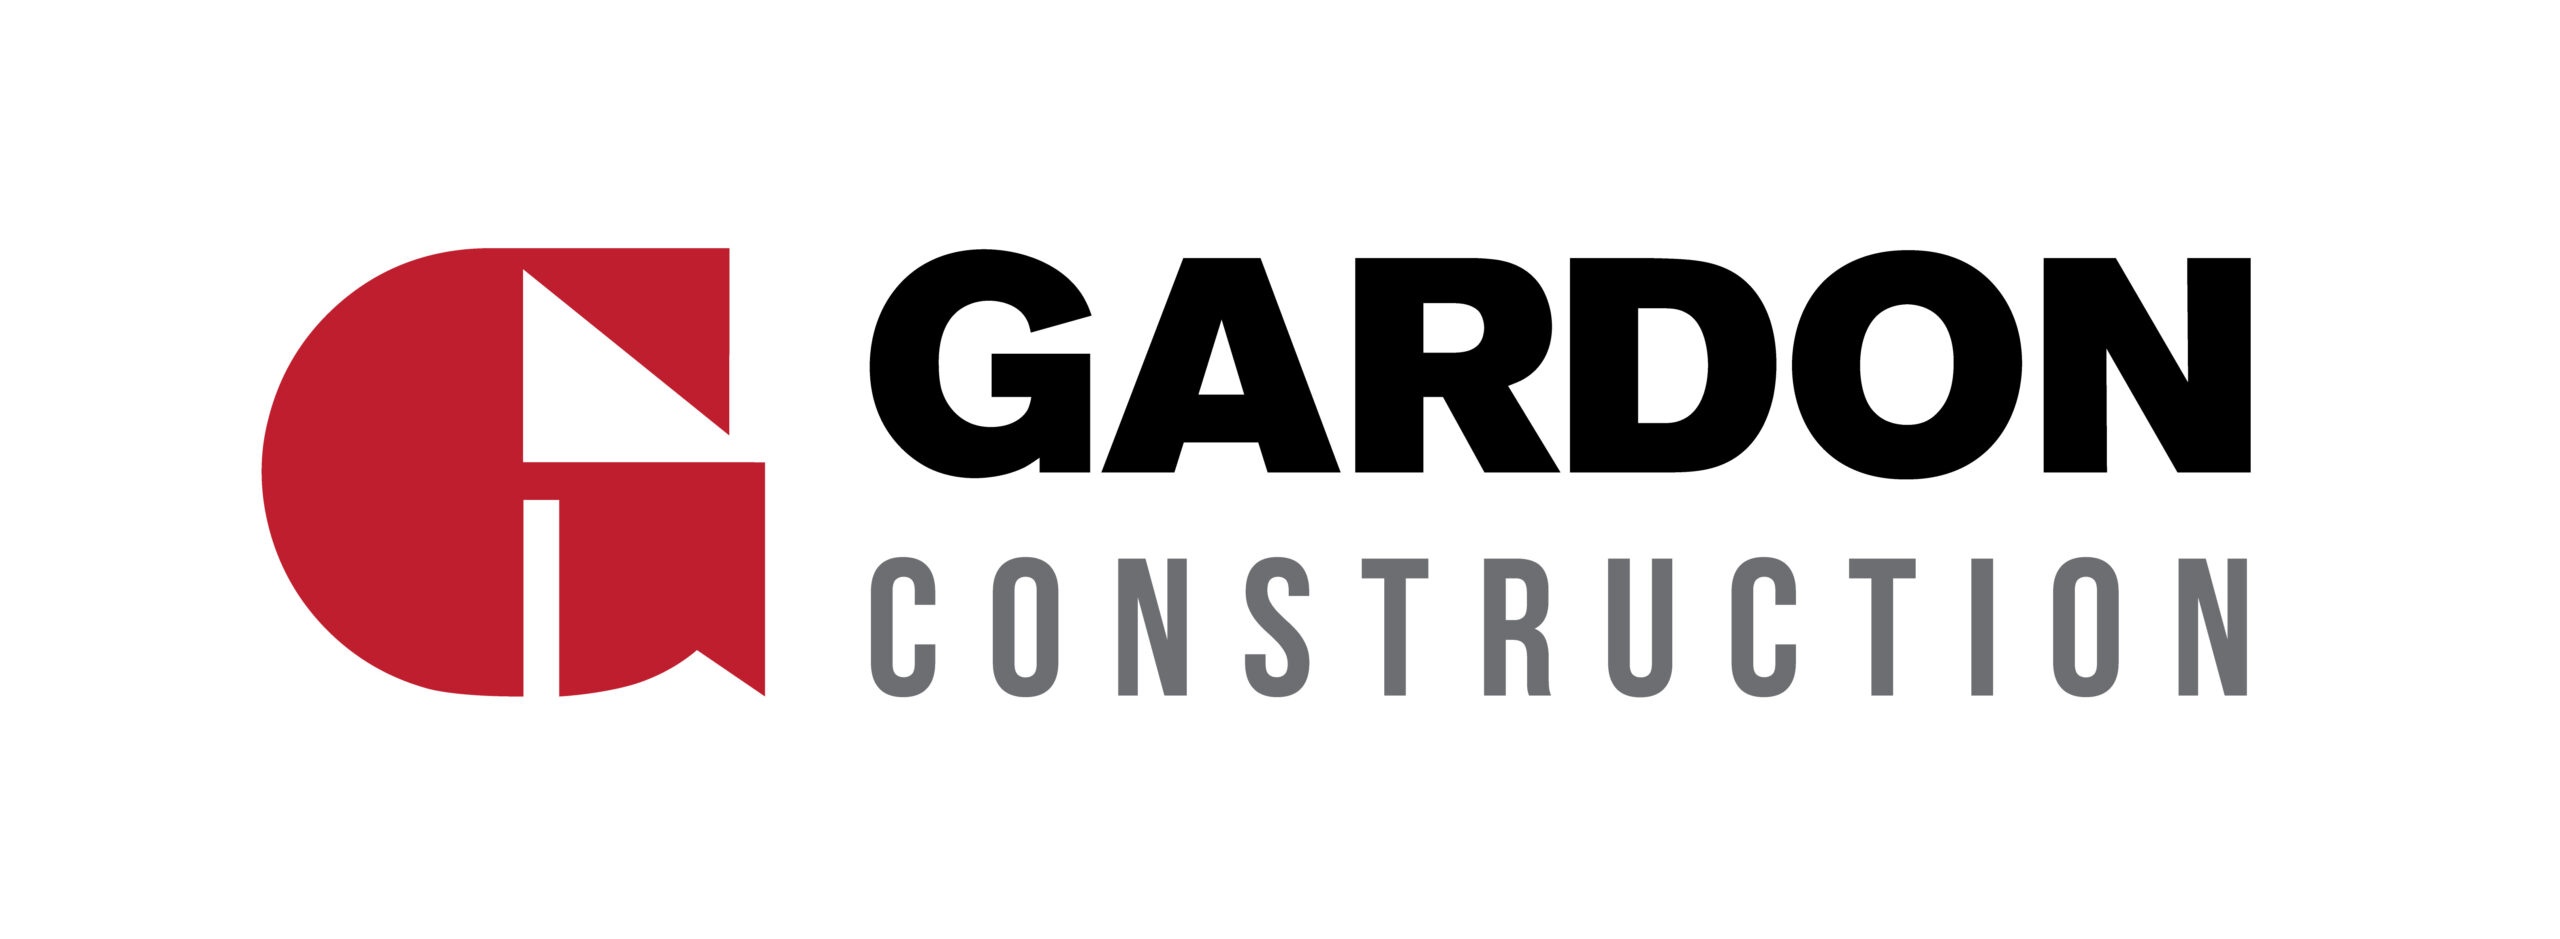 Gardon Construction Ltd logo